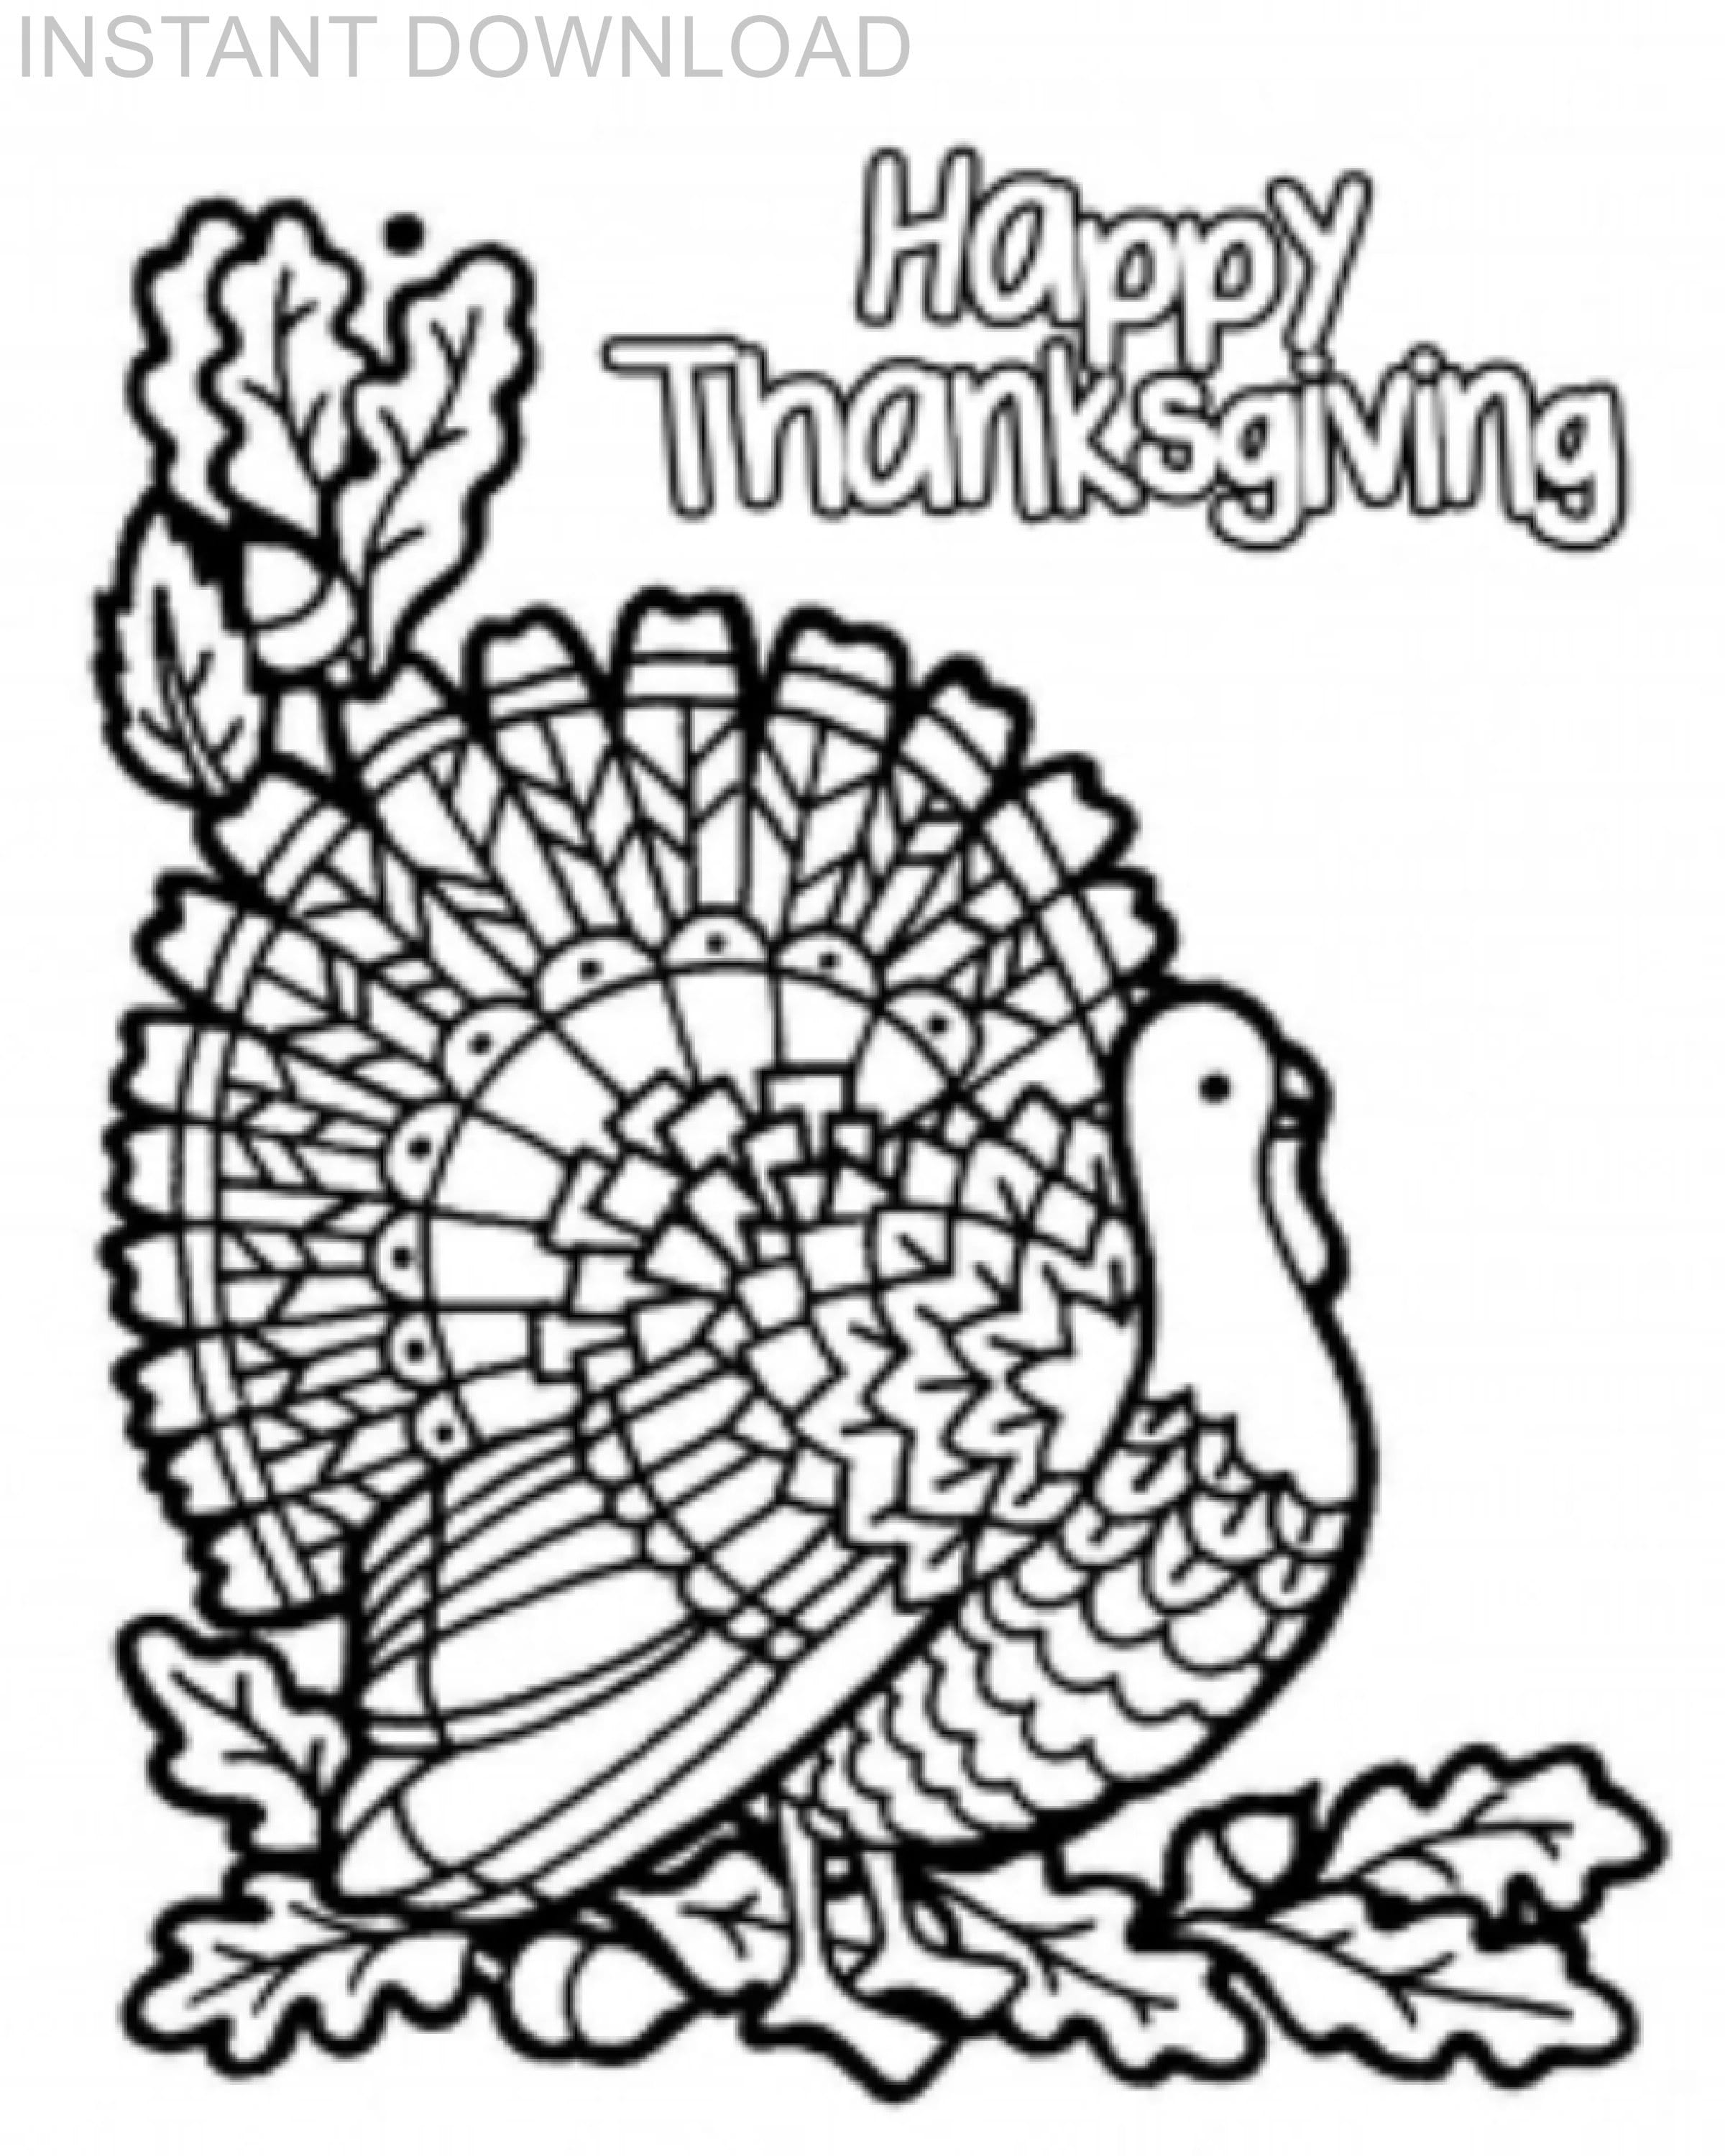 Printable x happy thanksgiving turkey coloring pageinstant downloaddigital fileplus bonus